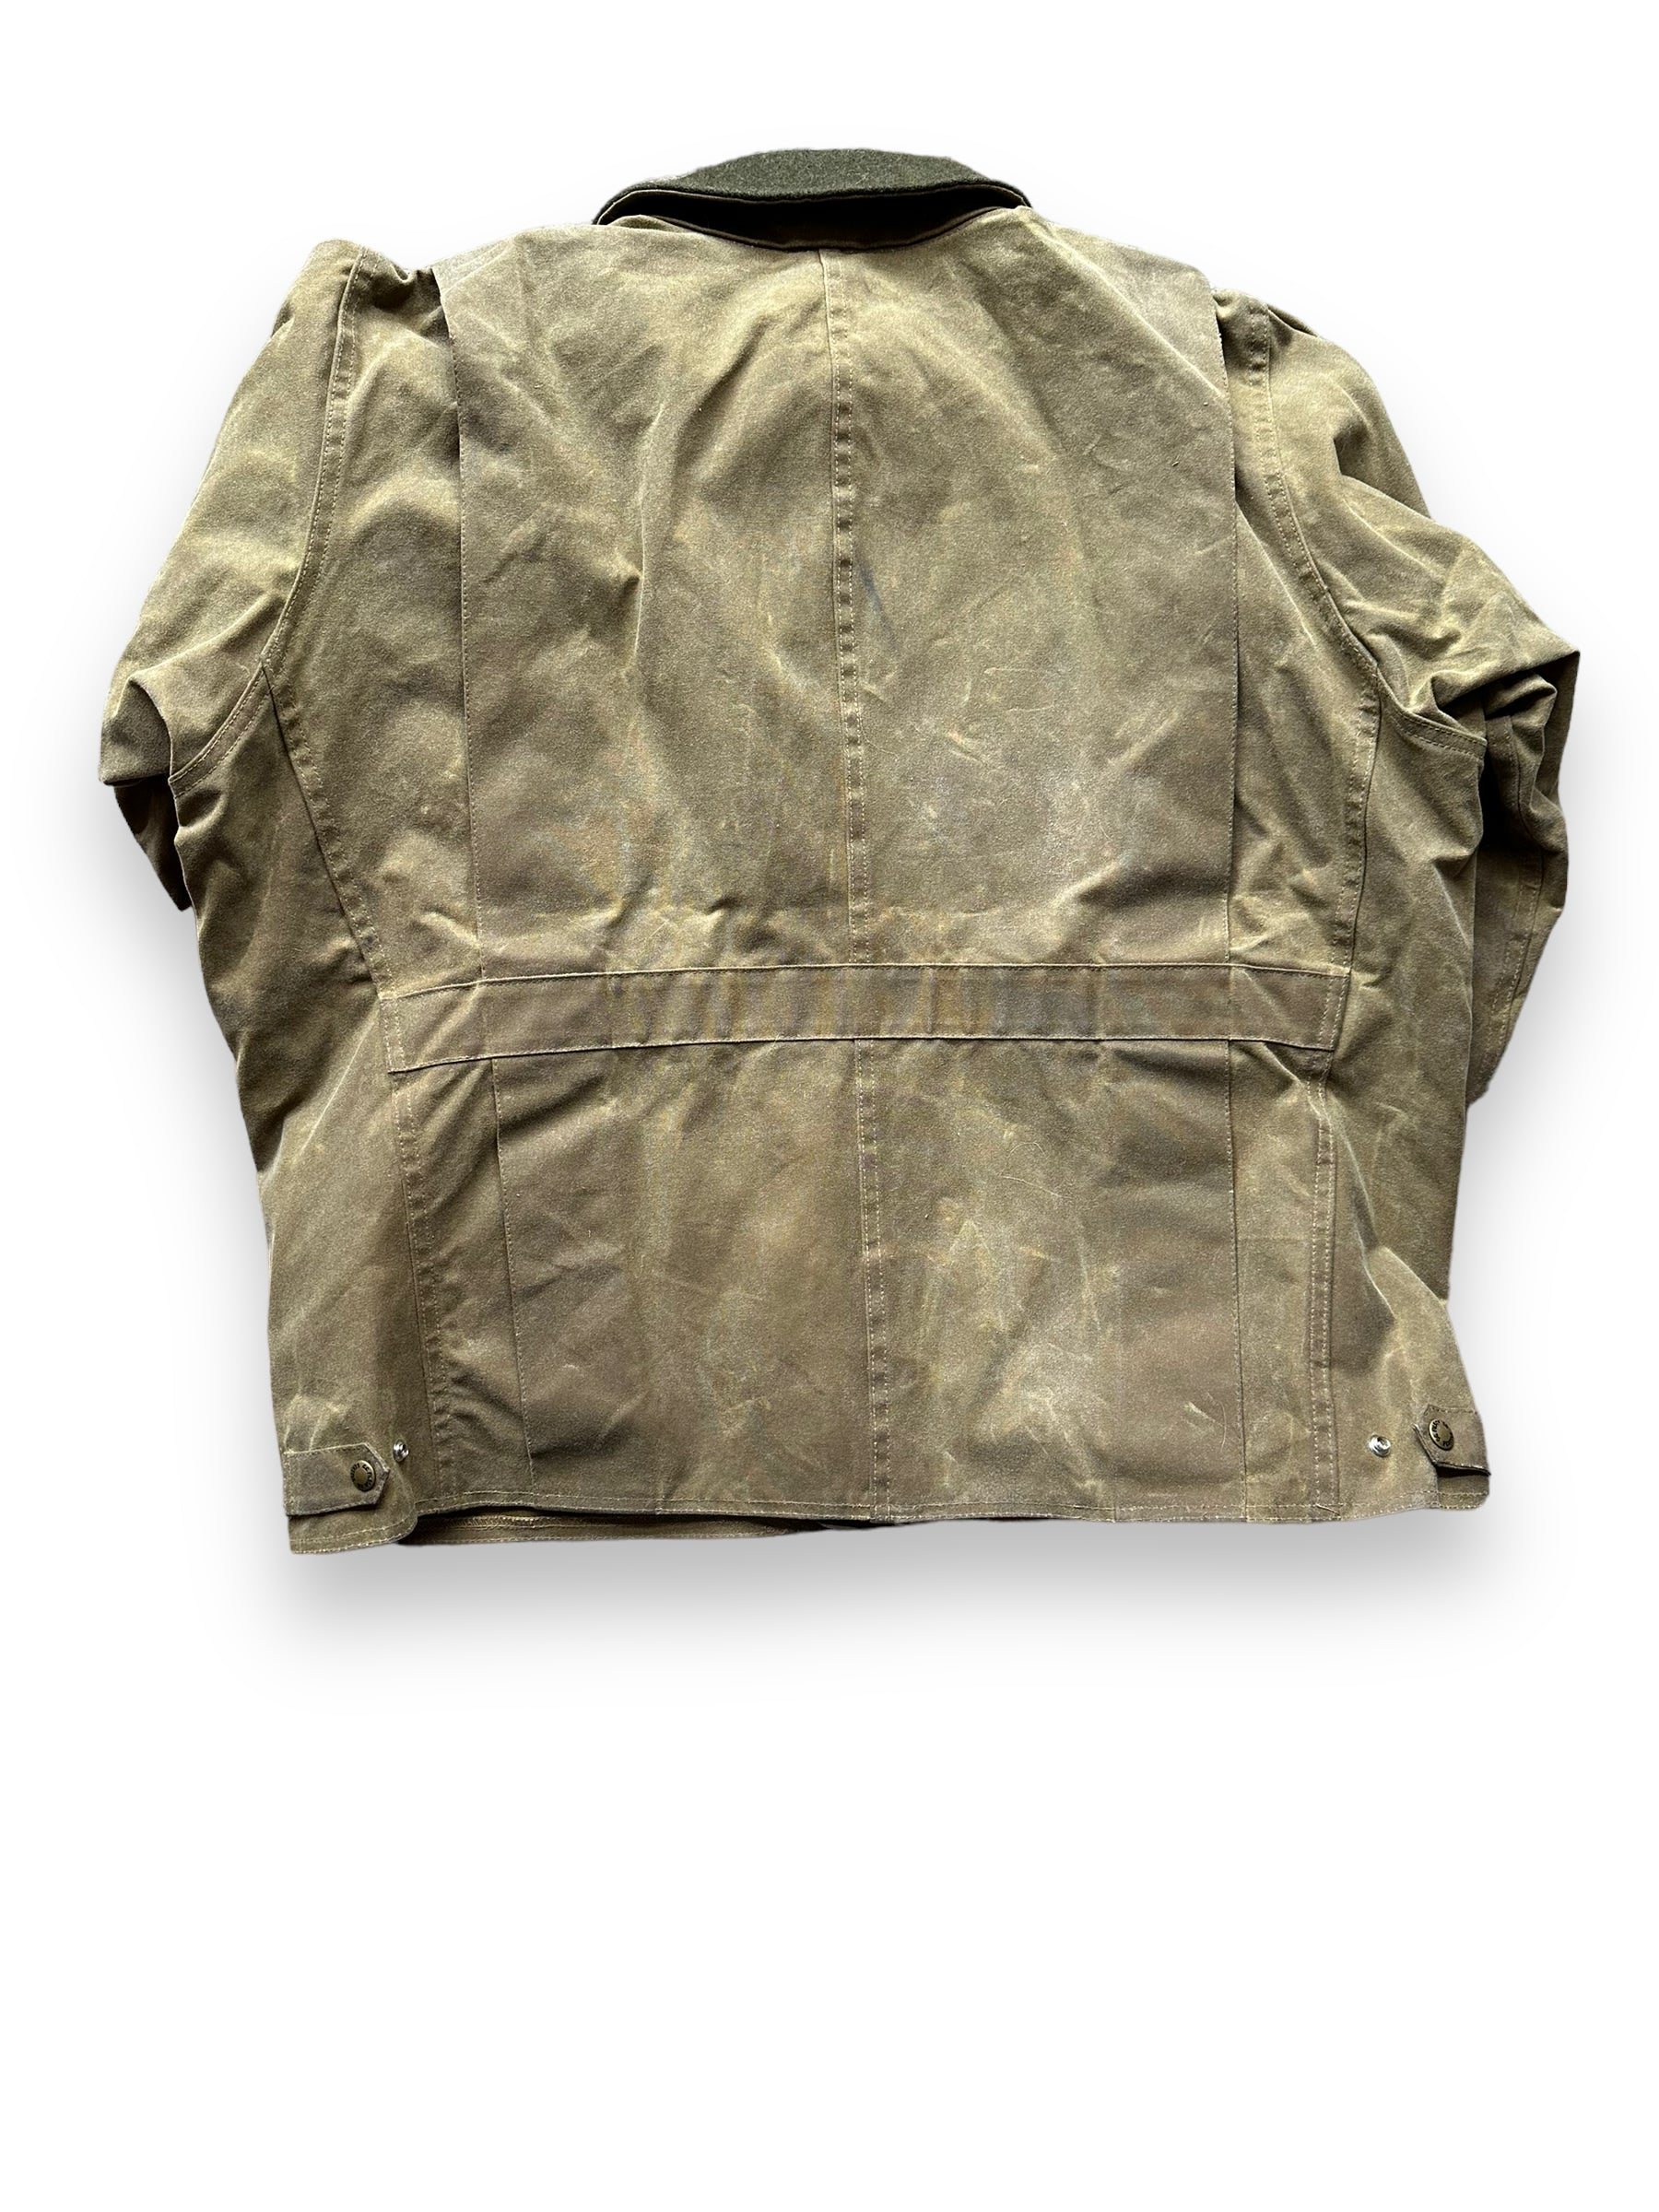 Rear View of Filson Tin Cloth Jacket SZ XL |  Barn Owl Vintage Goods | Filson Workwear Seattle